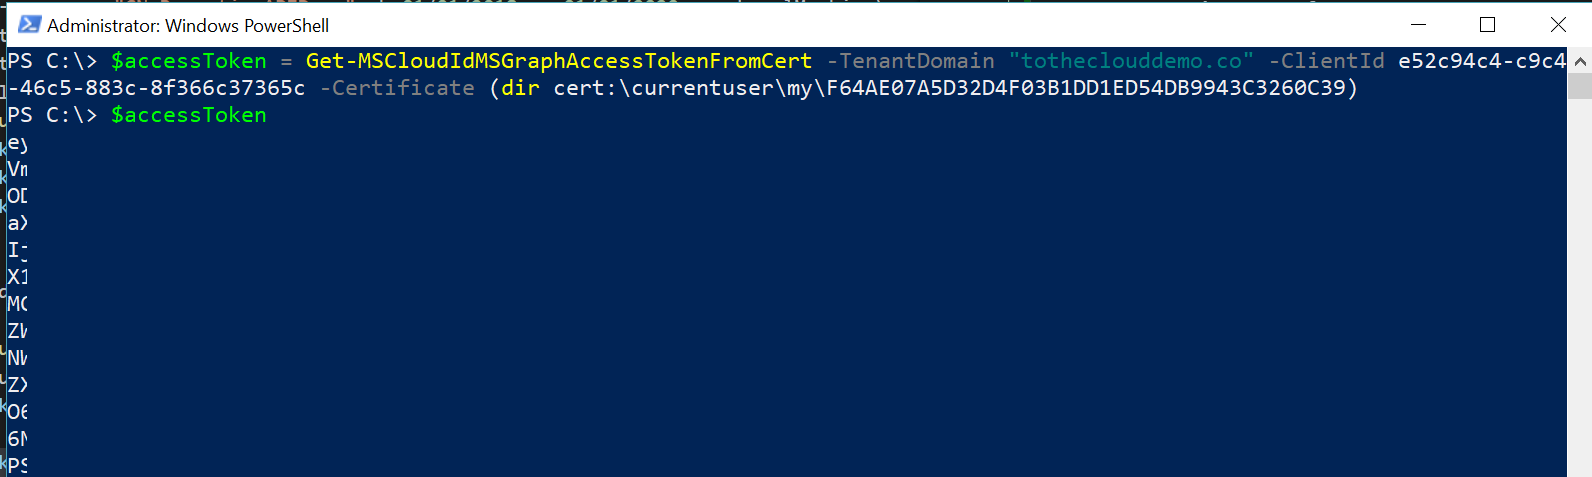 Screenshot shows a PowerShell window with a command that creates an access token.